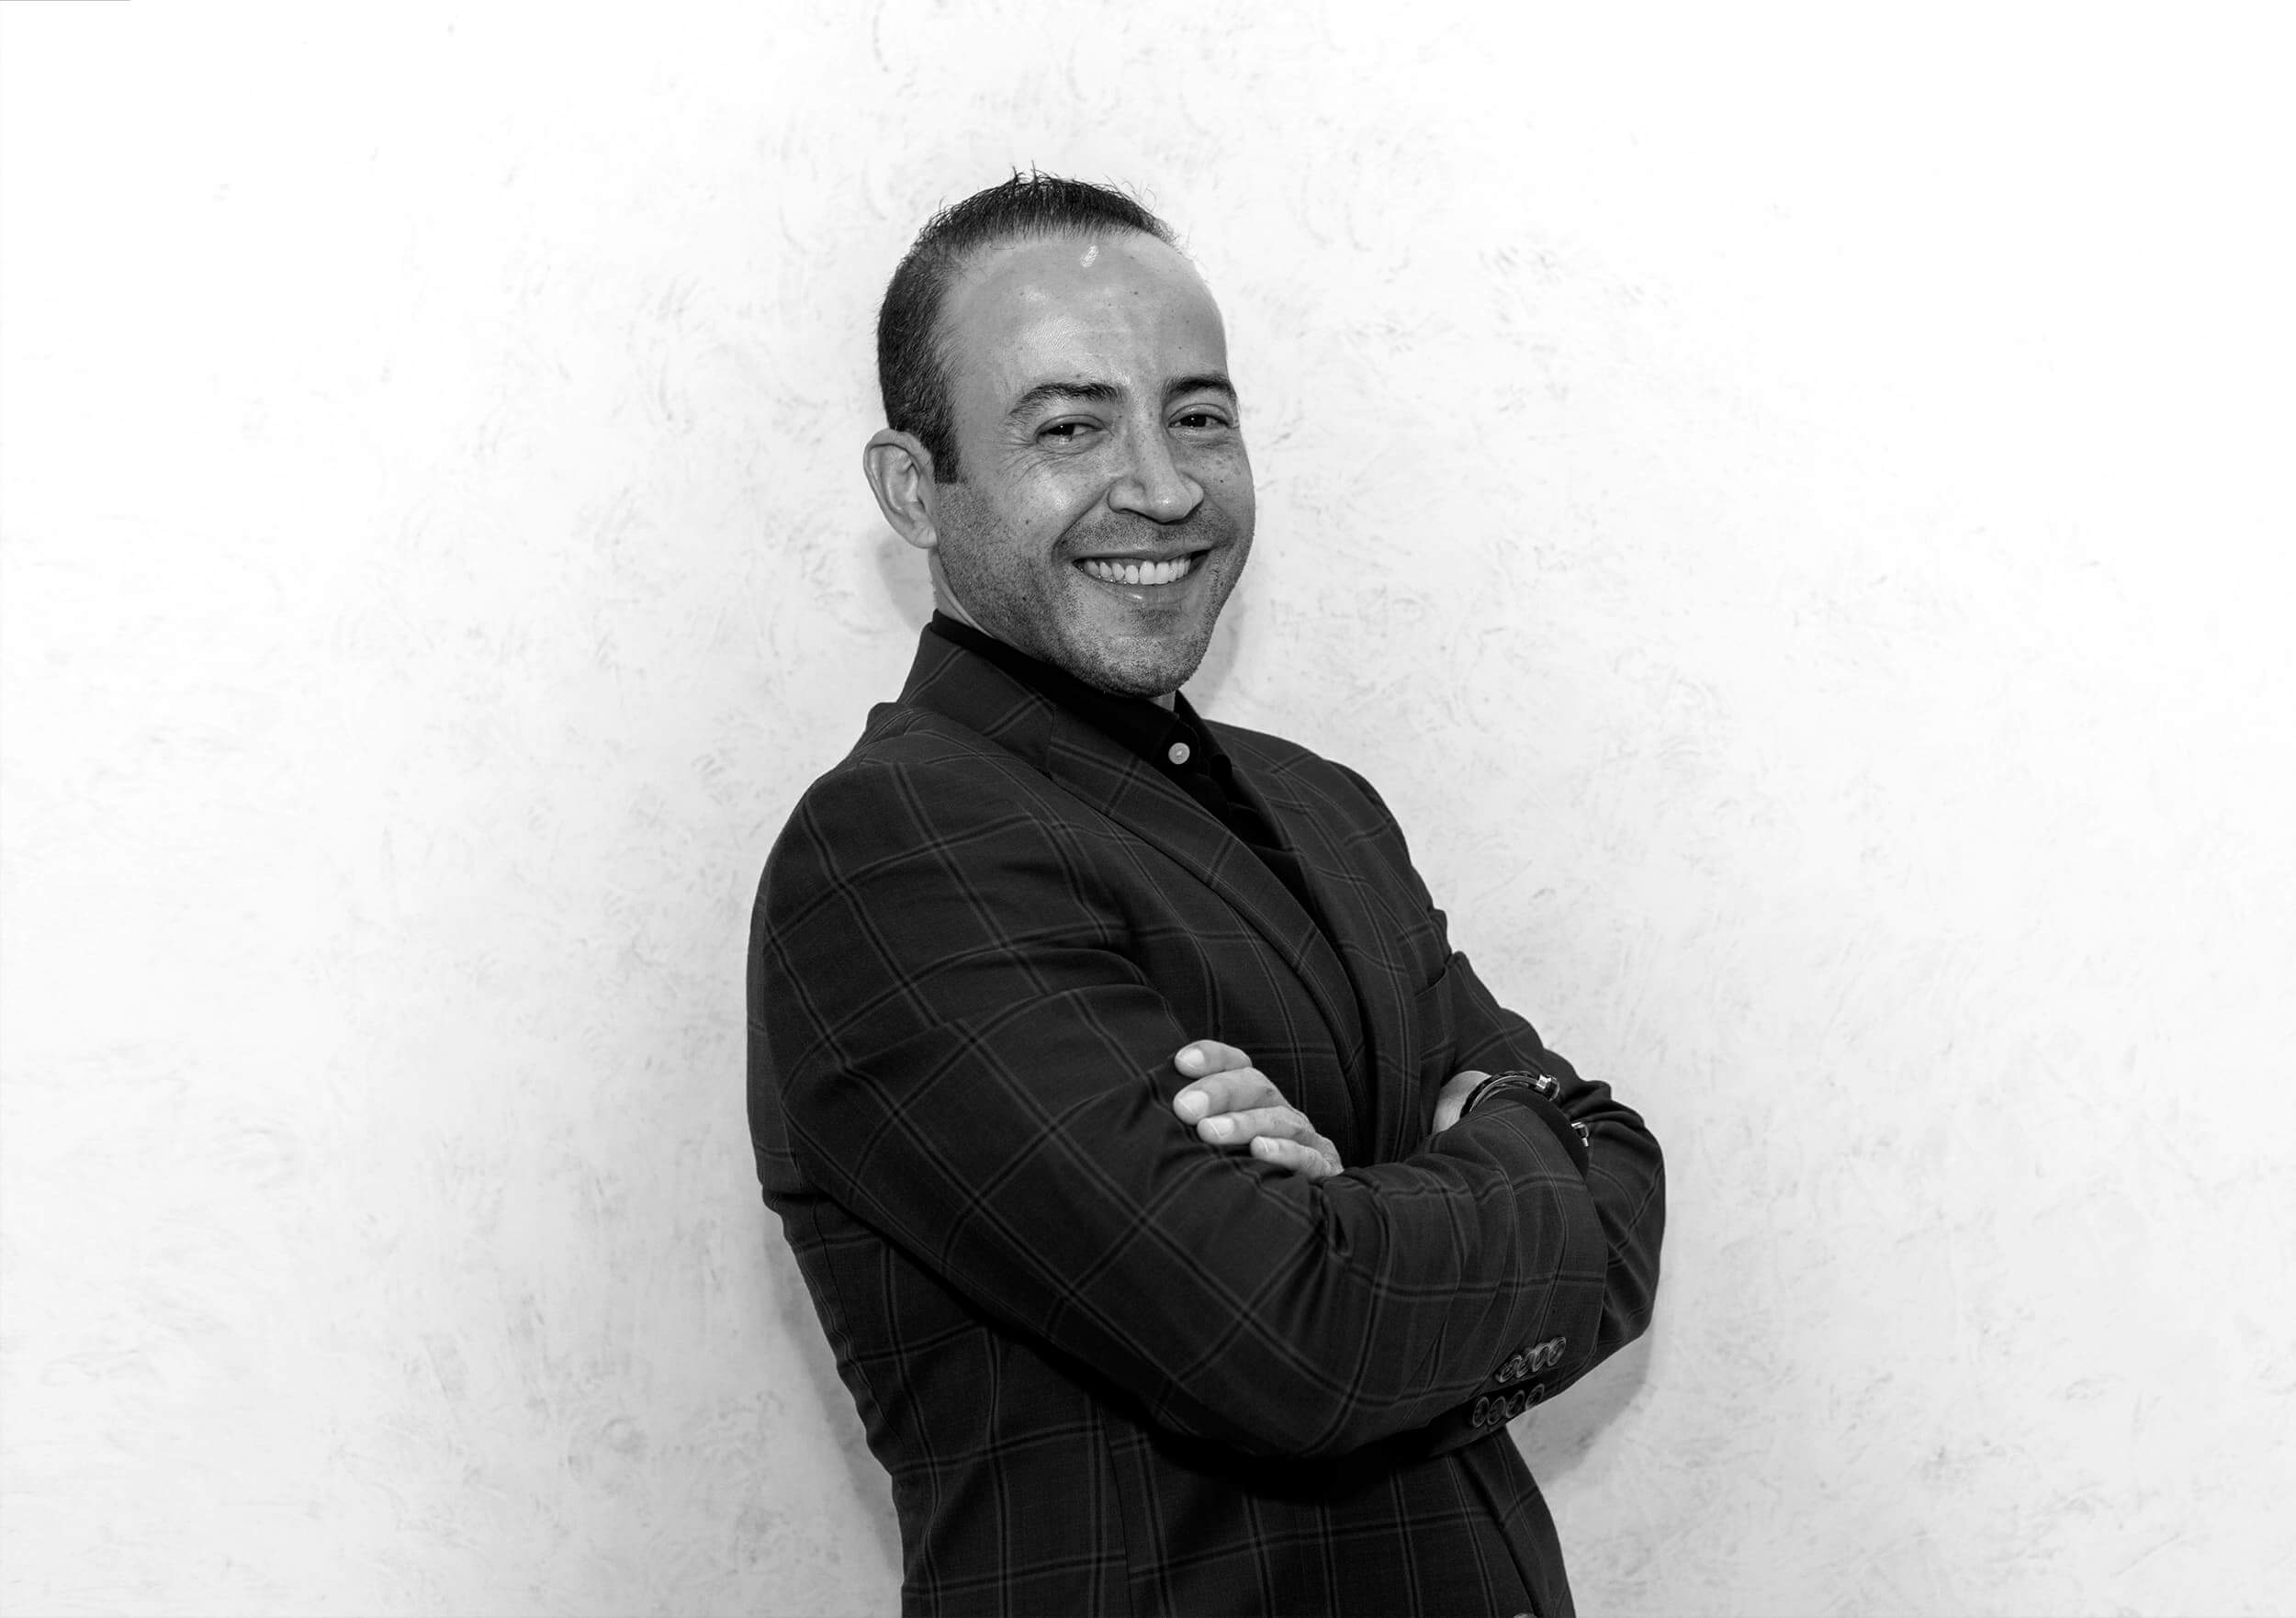 Carlo Ledezma